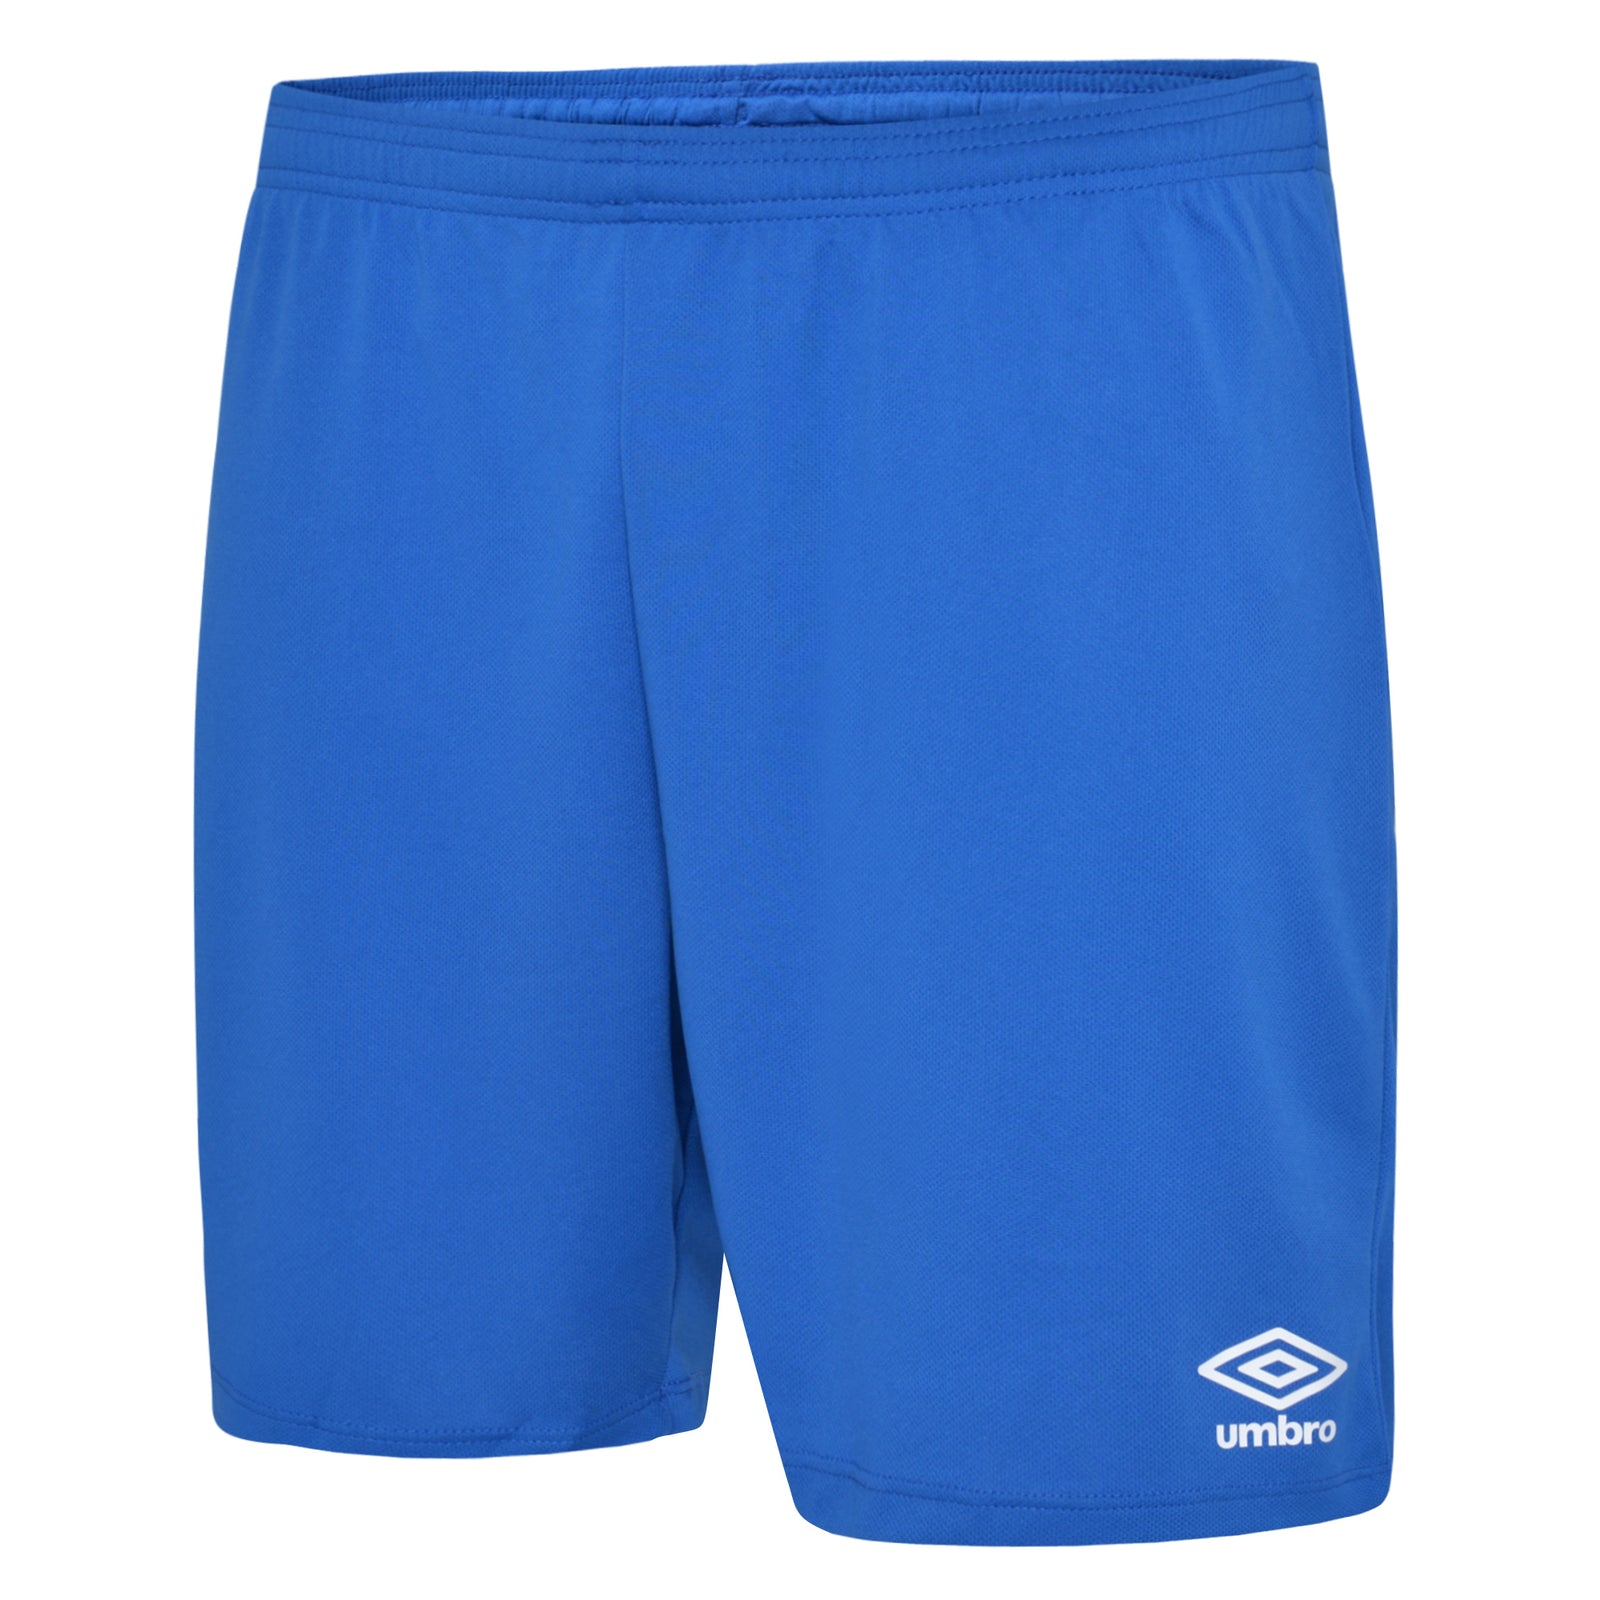 Umbro Shorts - footballkitsdirect.com